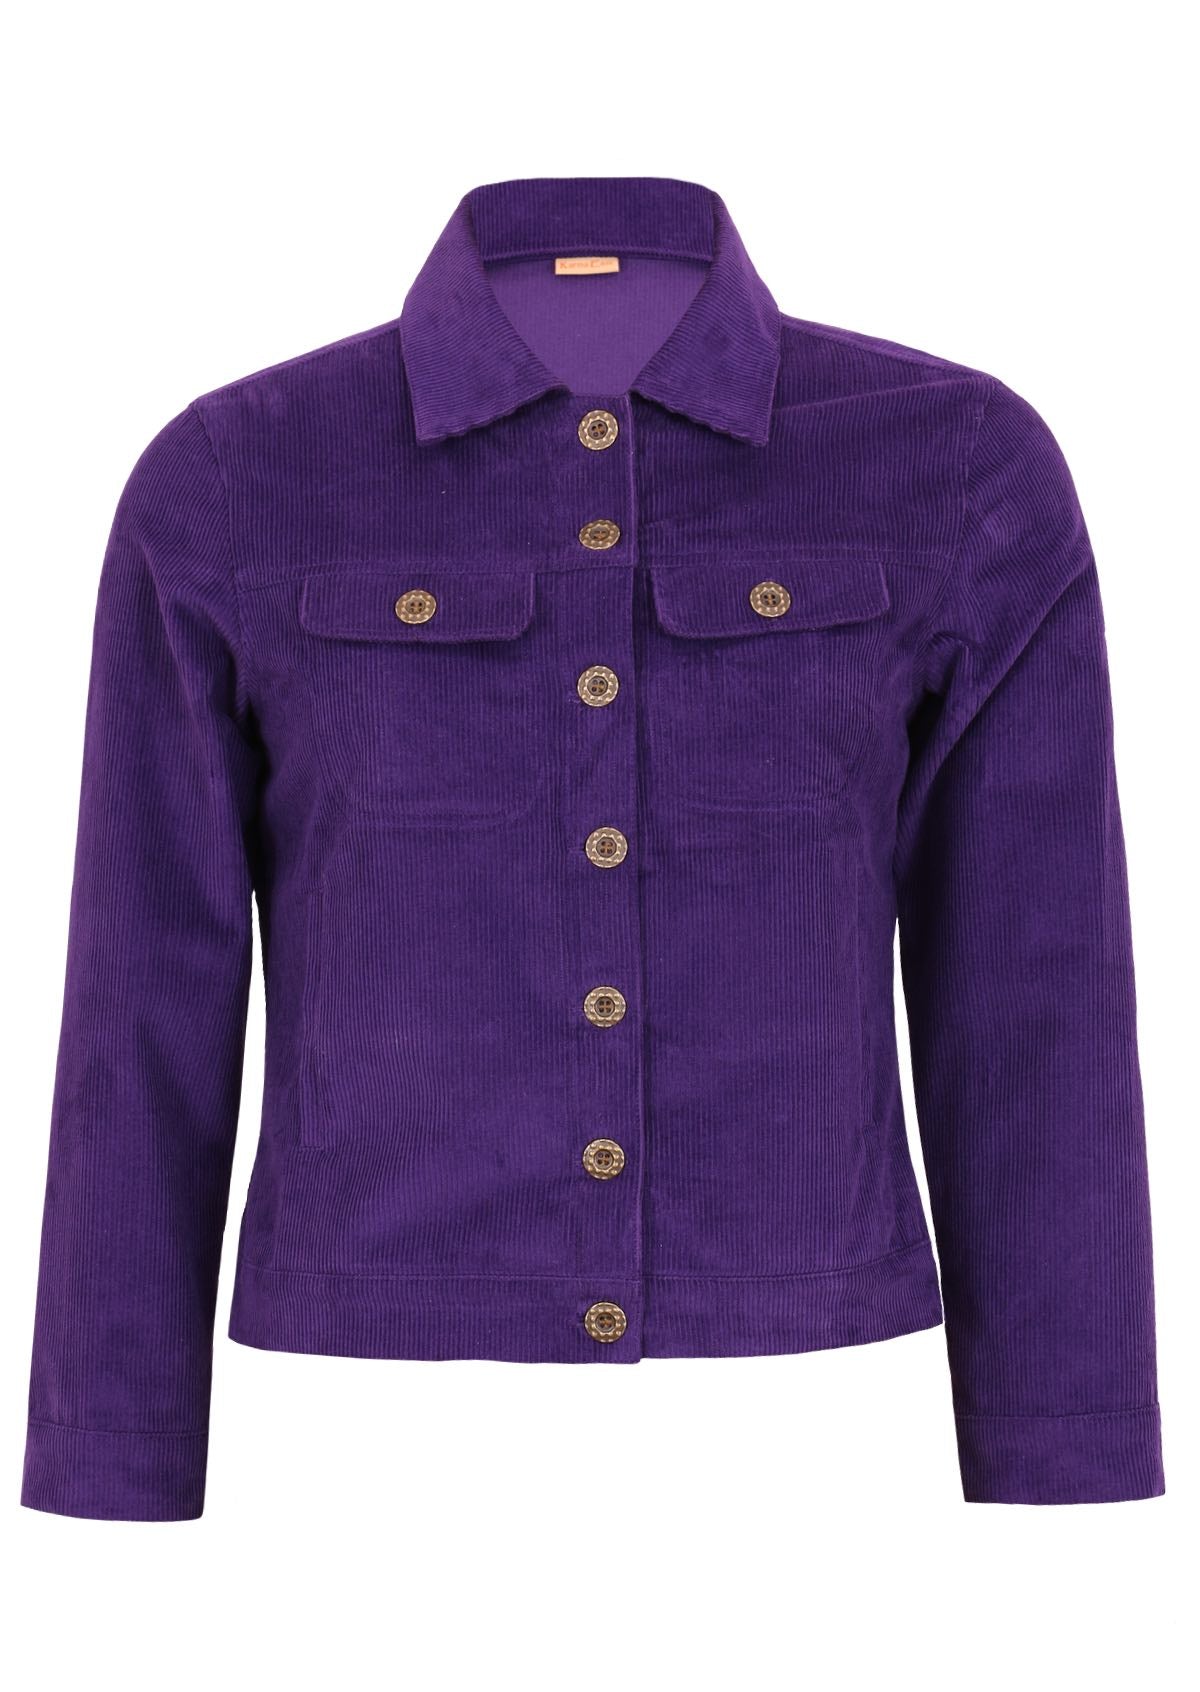 100% cotton corduroy jacket in a bold purple. 